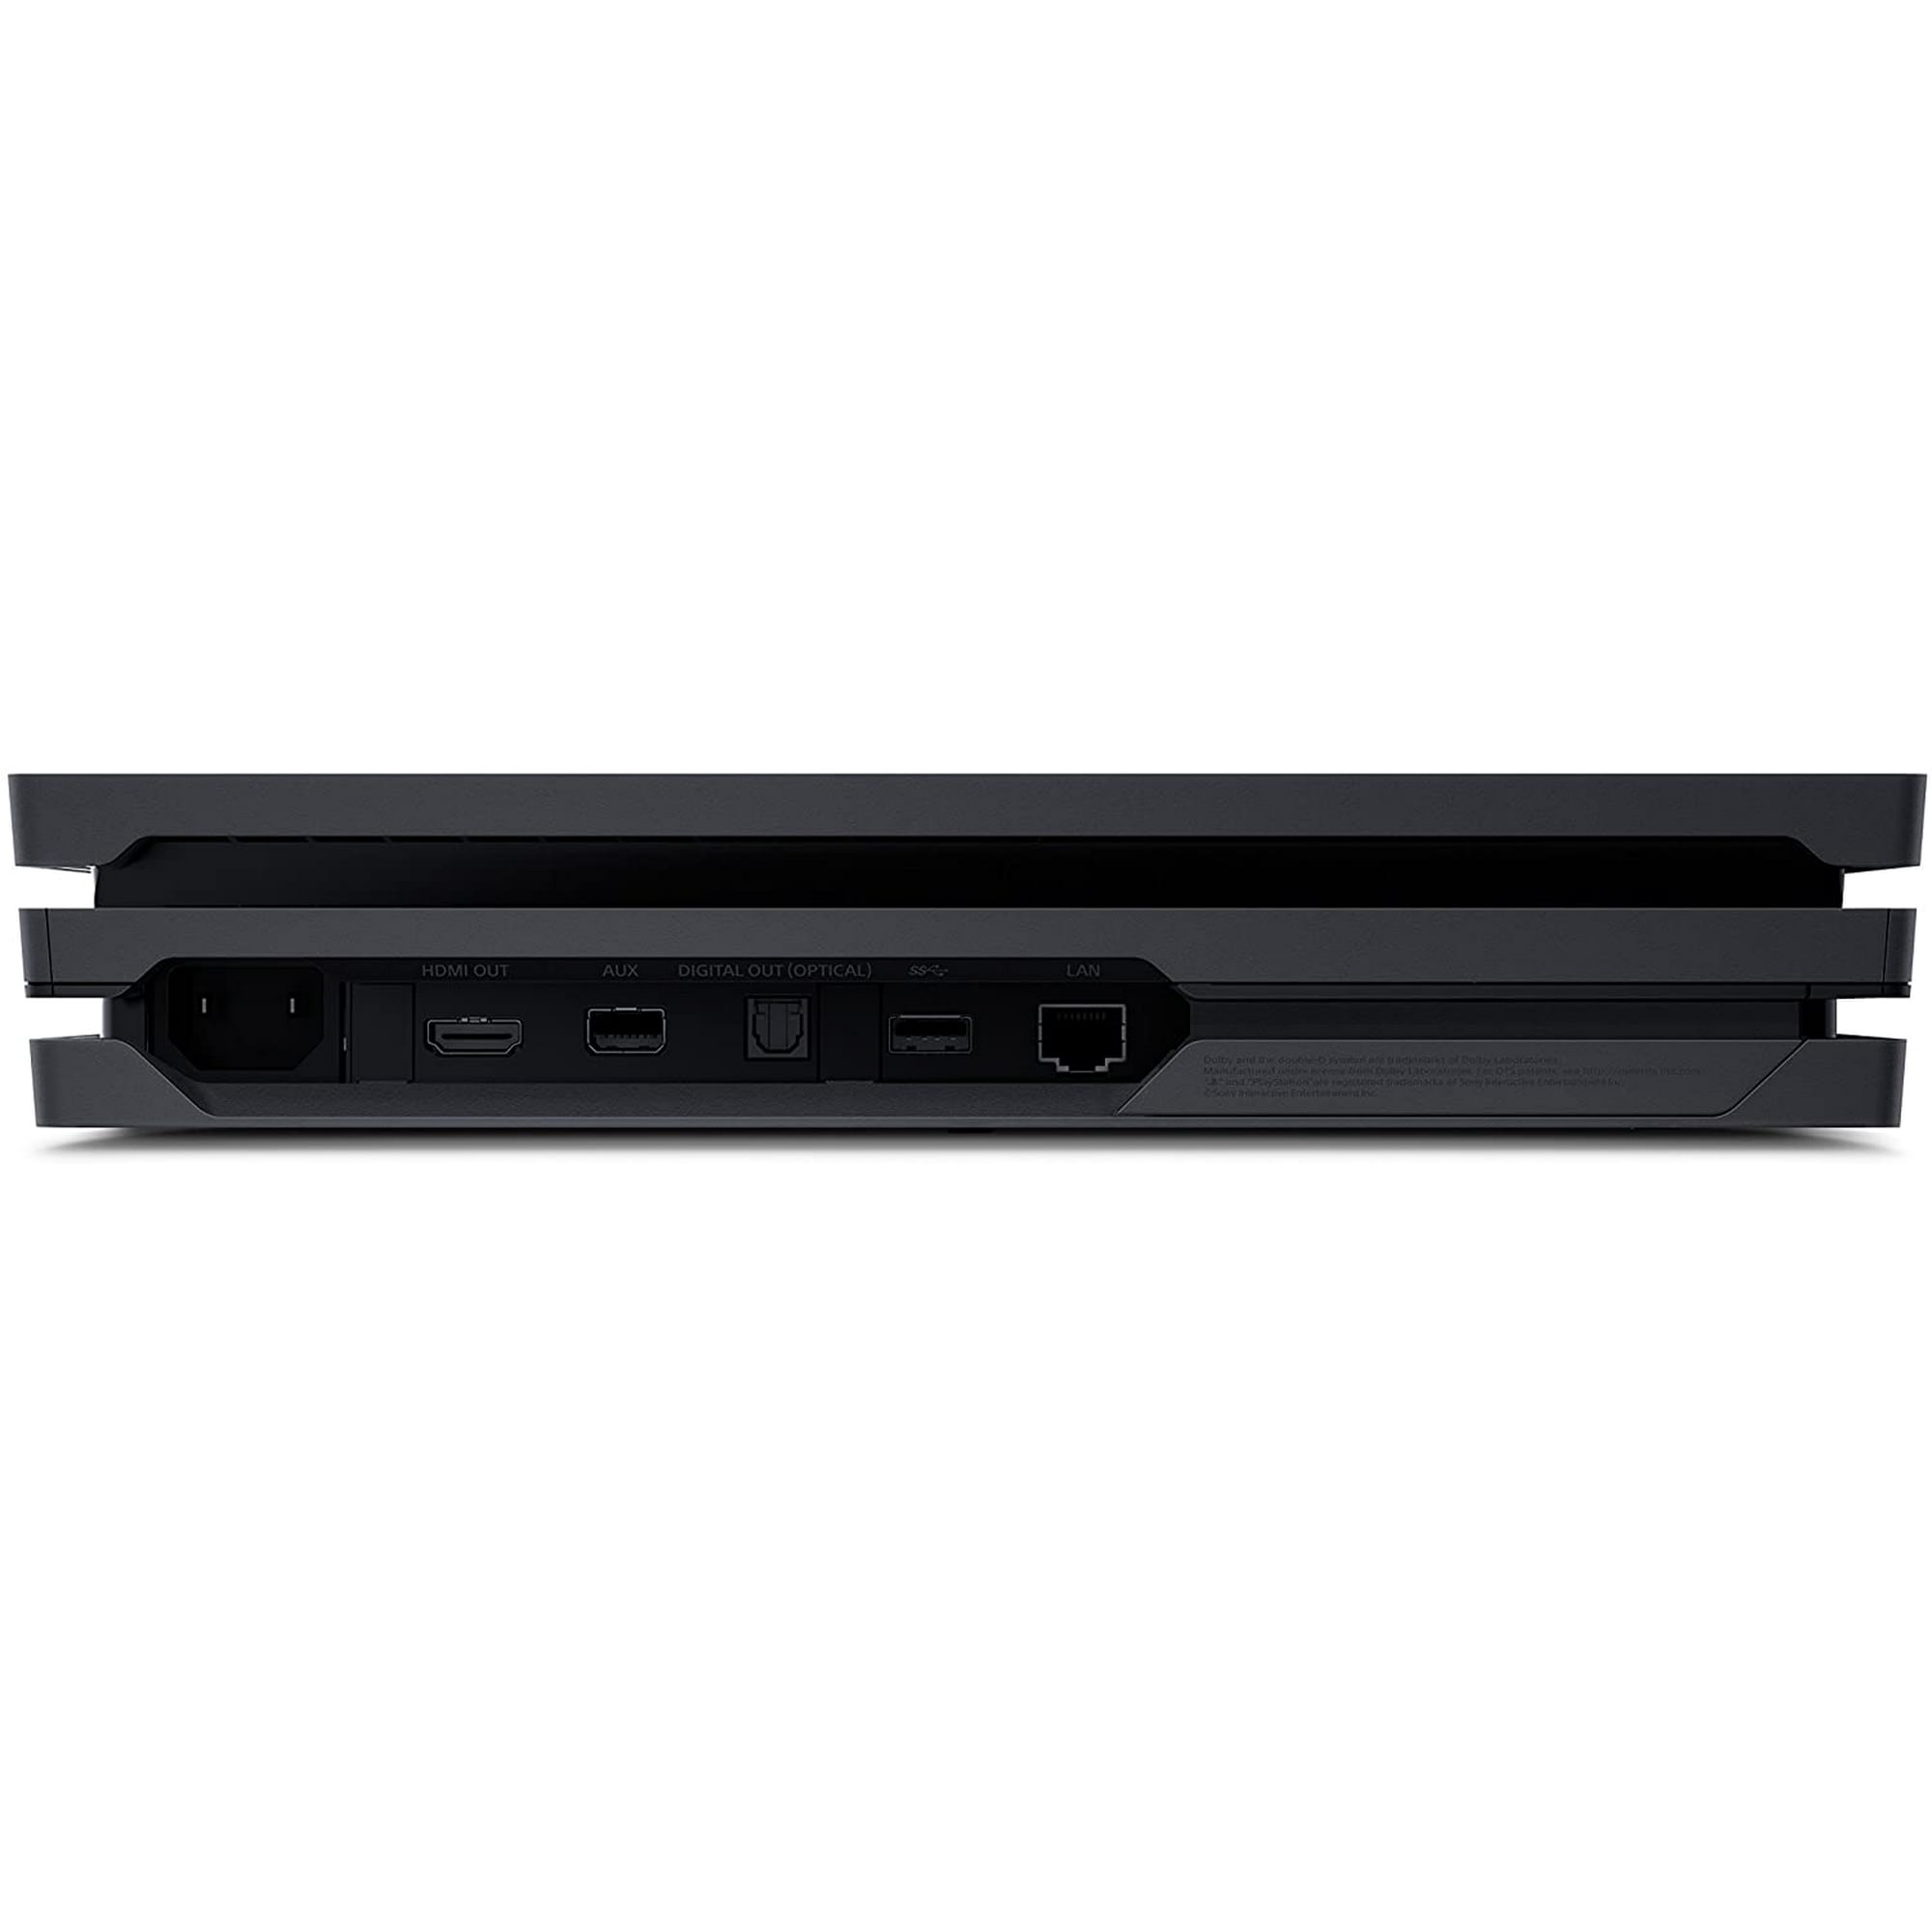 Sony PlayStation 4 Pro Console - Jet Black - 1TB [PlayStation 4 